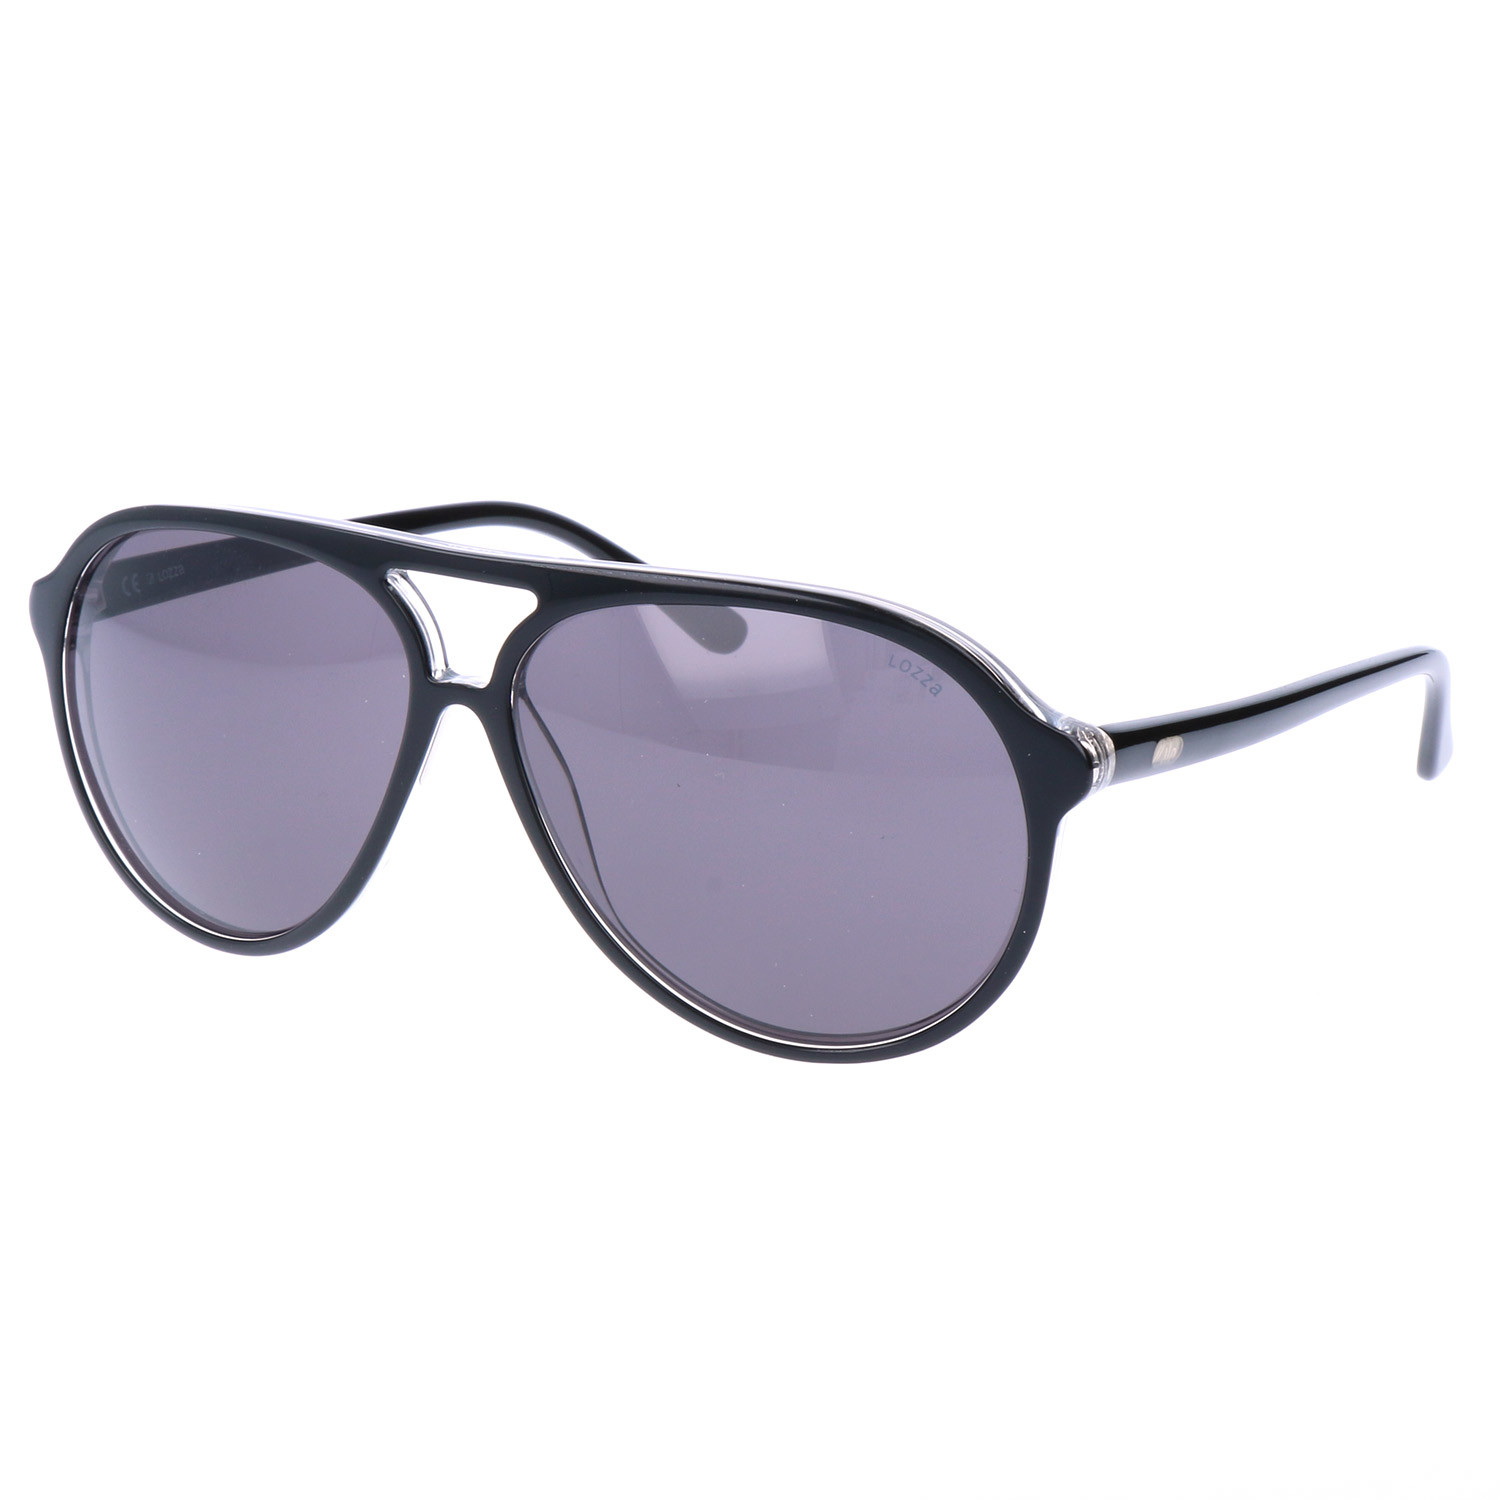 All Black Large Aviator Sunglasses | Les Baux-de-Provence